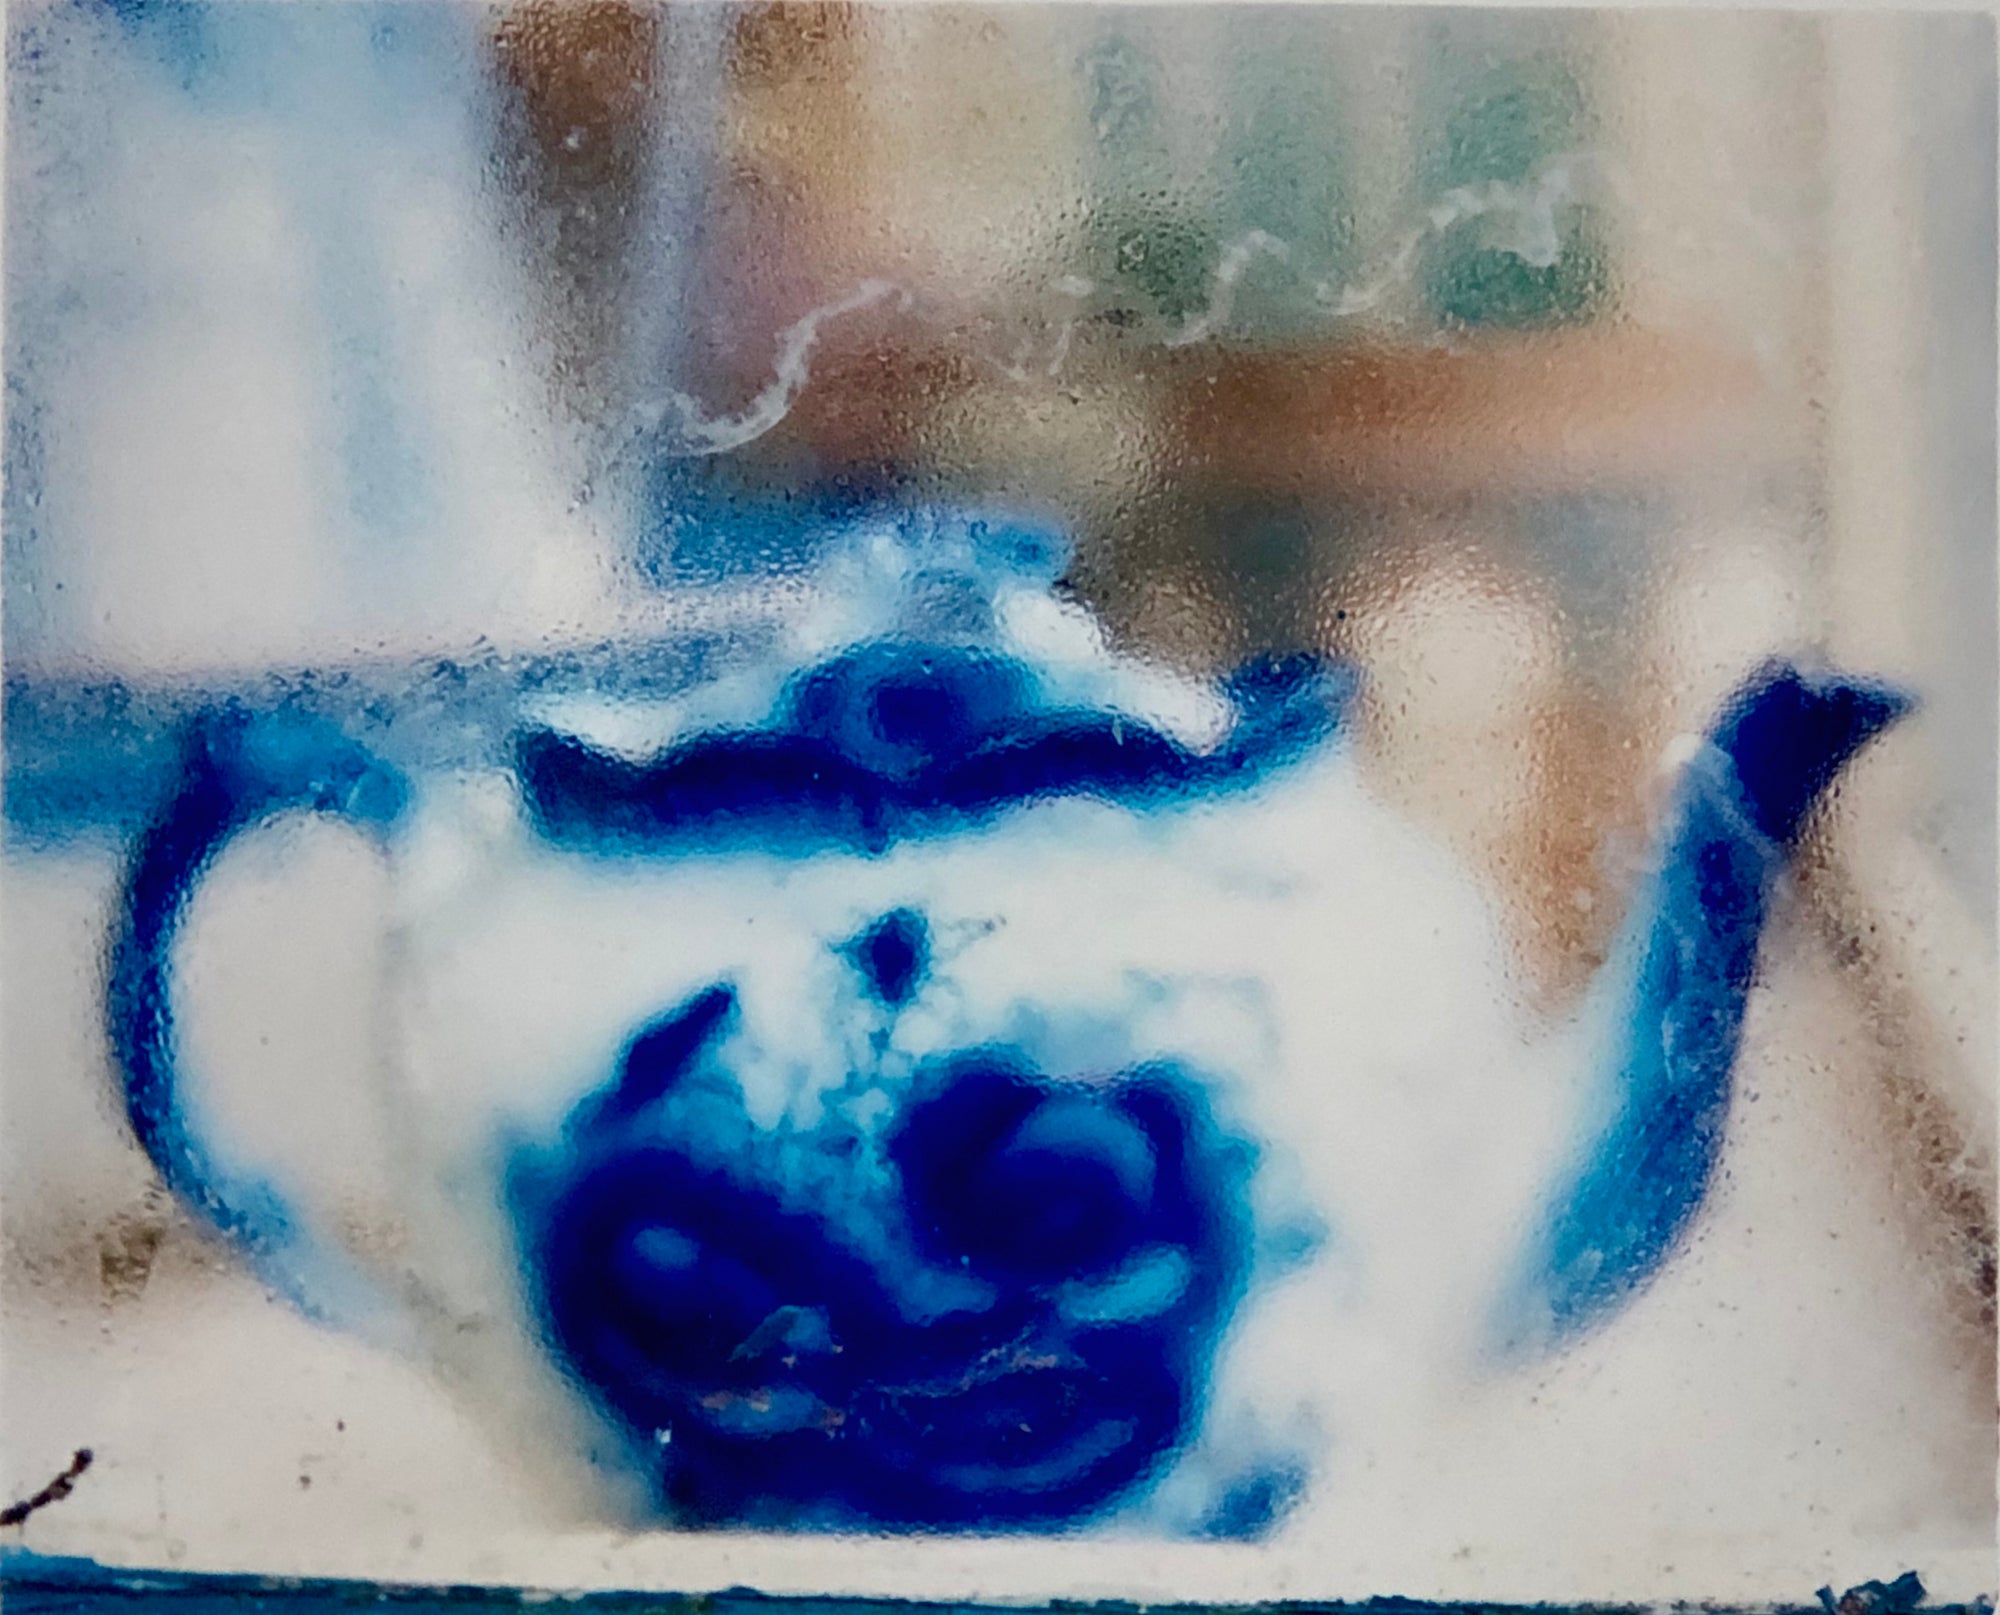 Blue and white tea pot